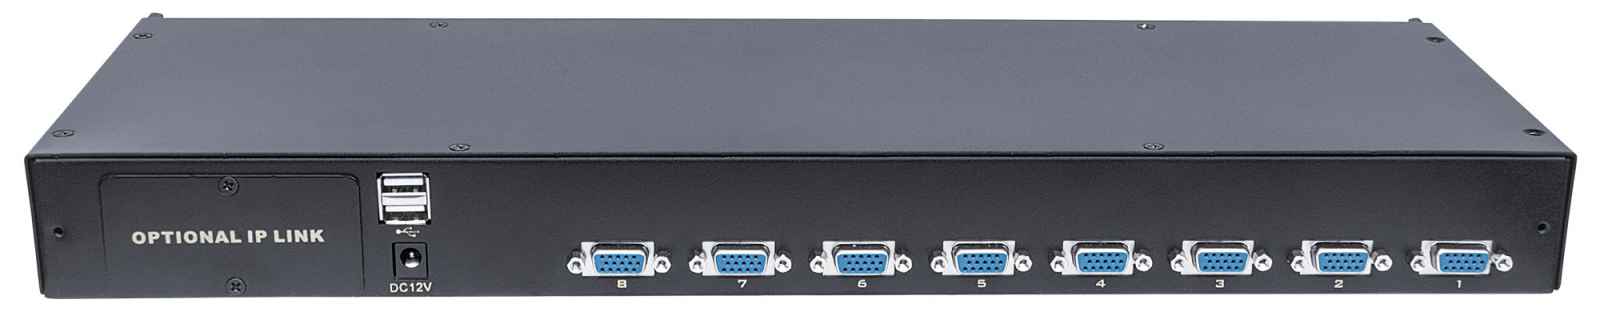 Intellinet Modular 8-Port VGA KVM Switch (507776) – Intellinet Europe